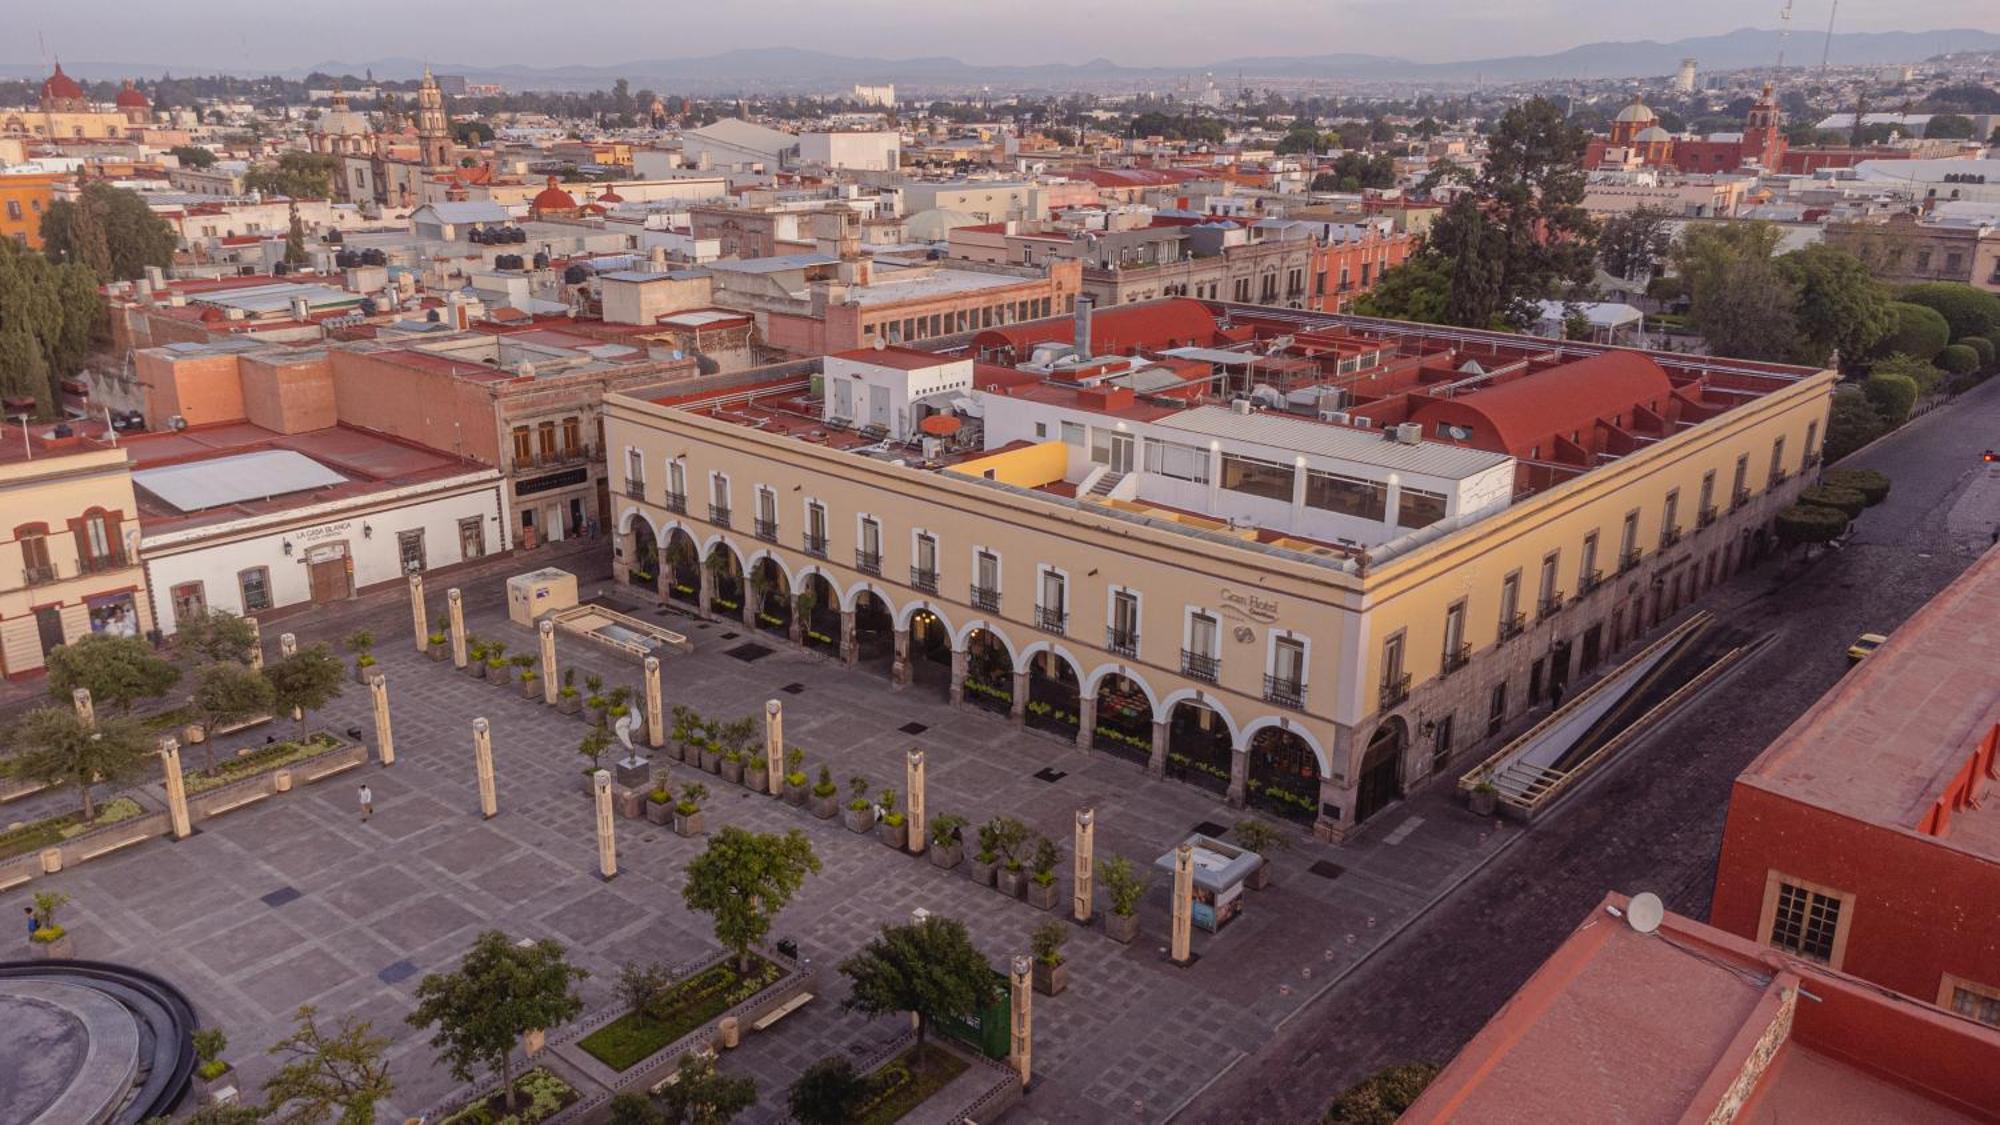 Gran Hotel de Querétaro Exterior foto